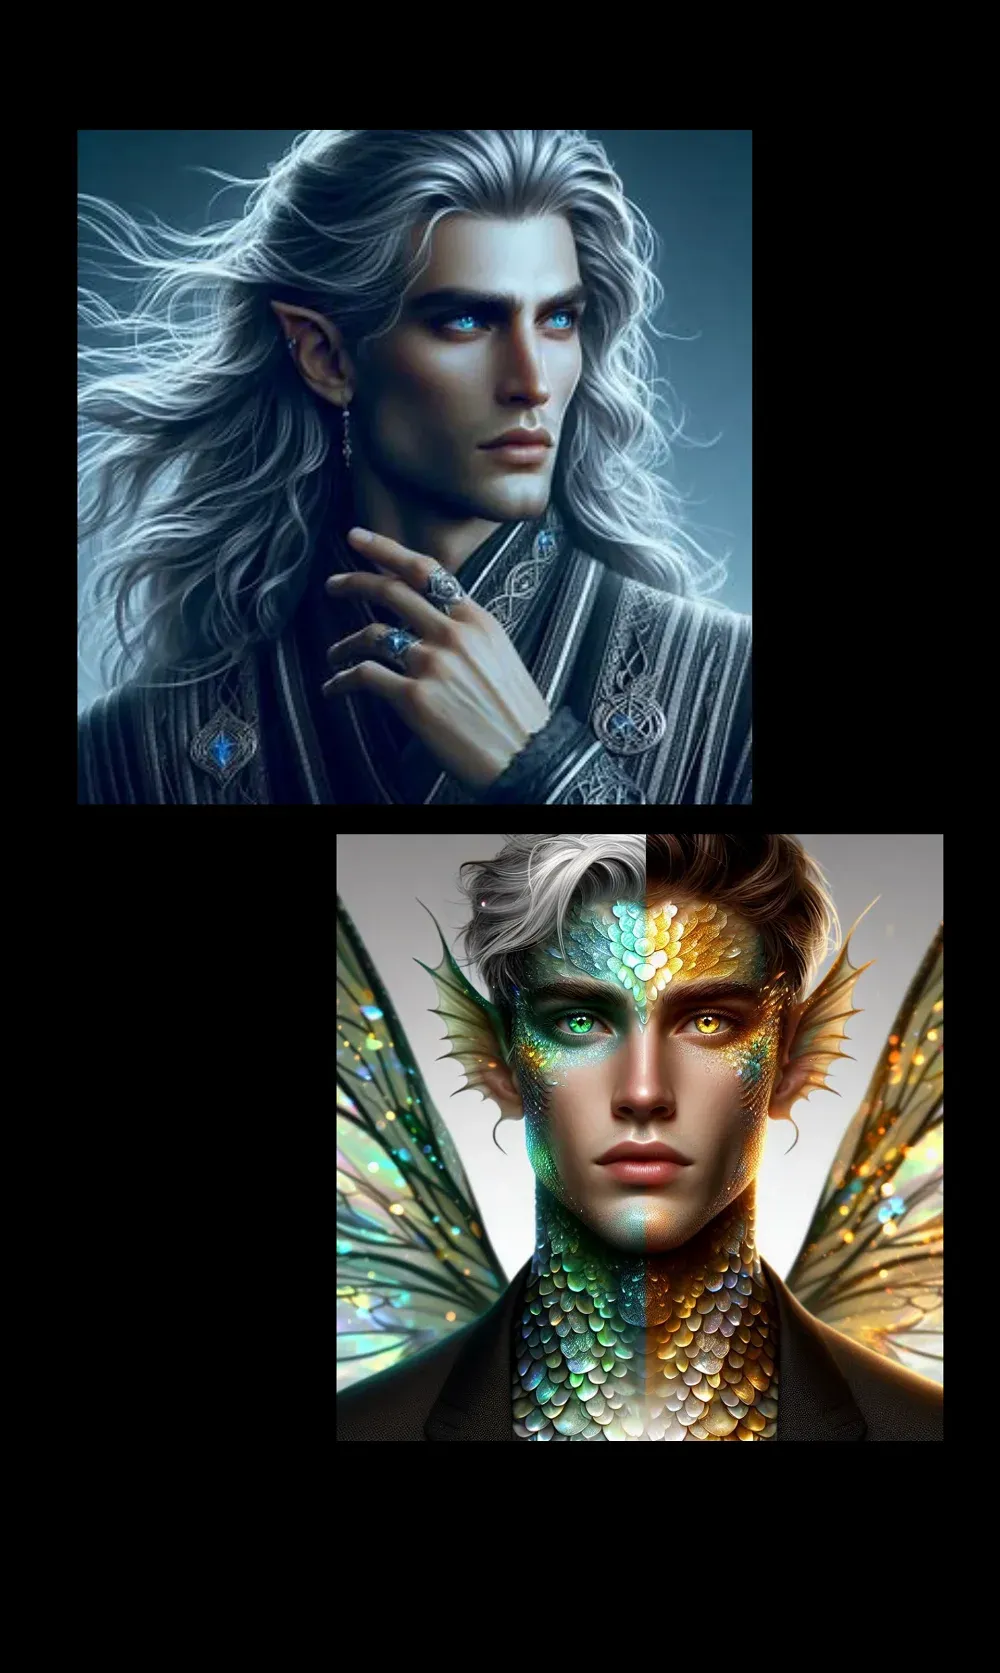 Avatar of Thalion and Kael